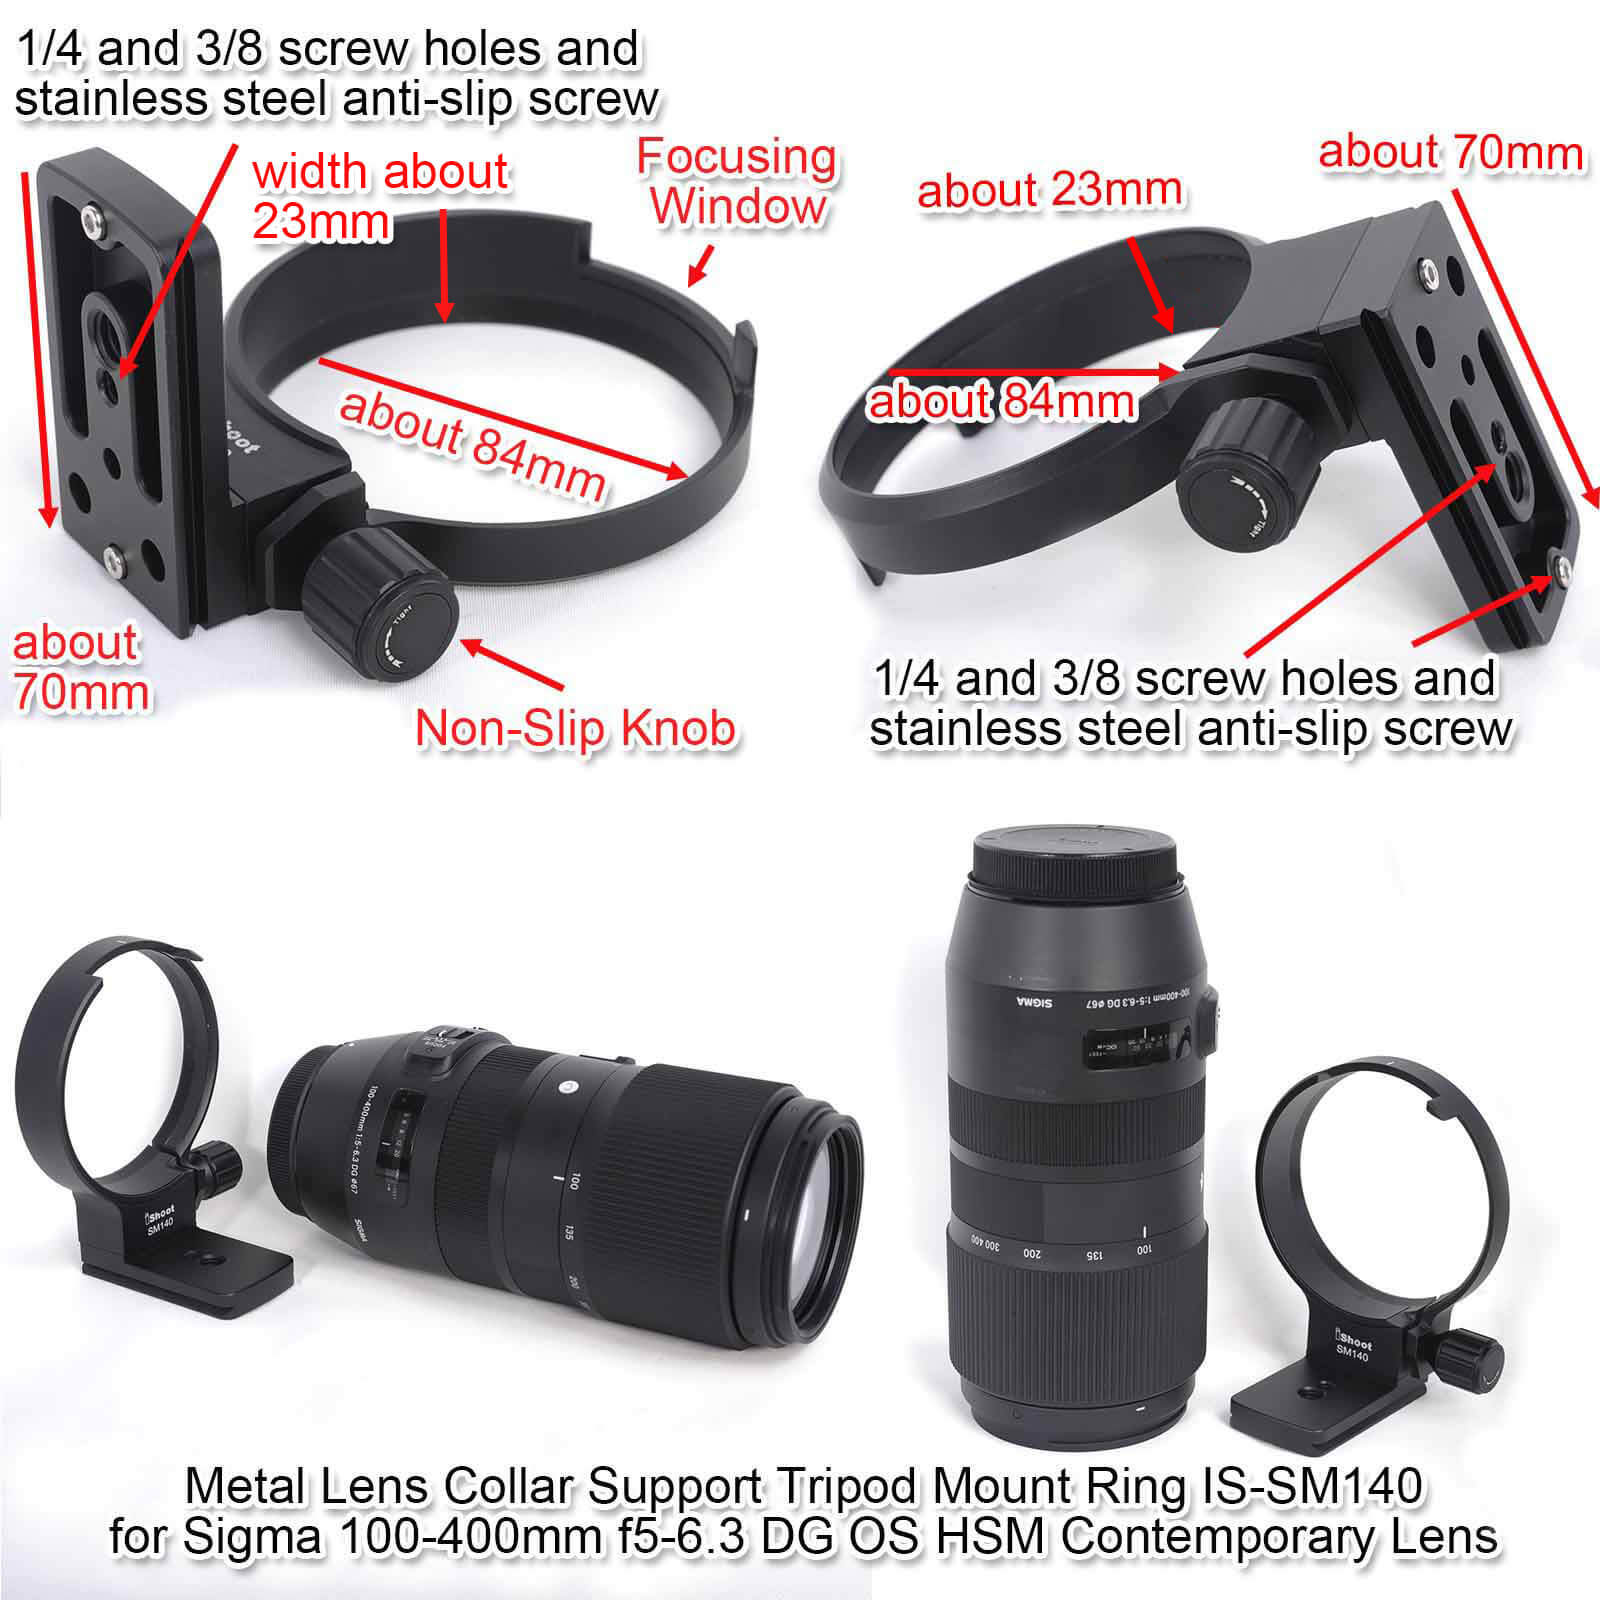 Sigma 100-400mm f5-6.3 DG OS HSM Contemporary Lens Tripod Mount Ring